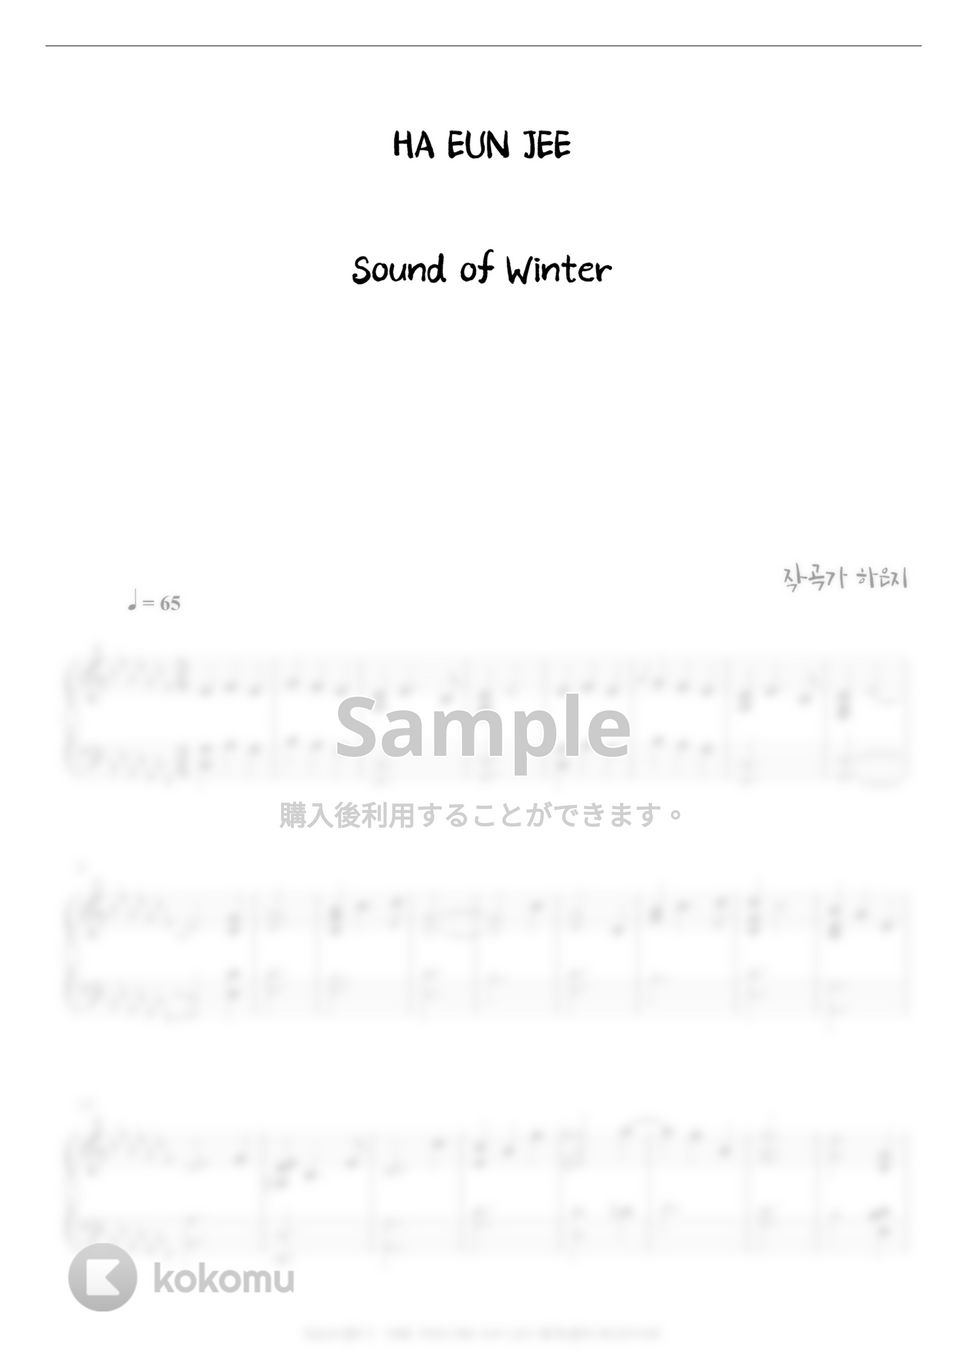 HA EUN JEE(ハ・ウンジ) - Sound of Winter